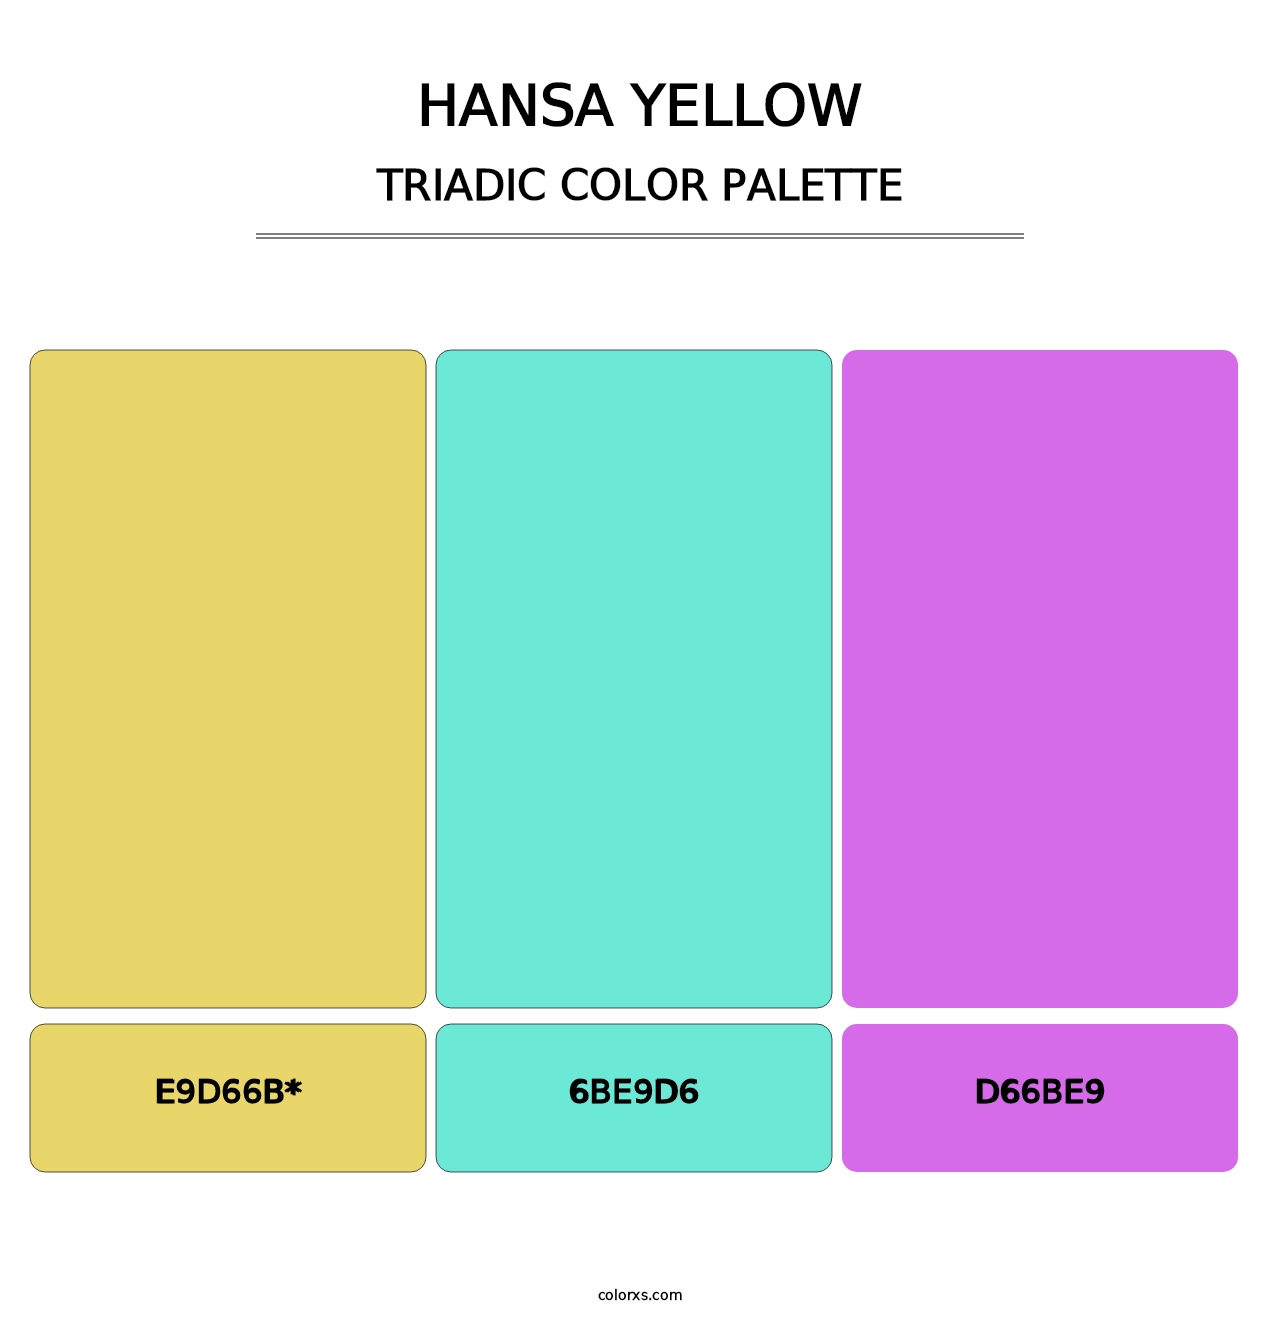 Hansa Yellow - Triadic Color Palette